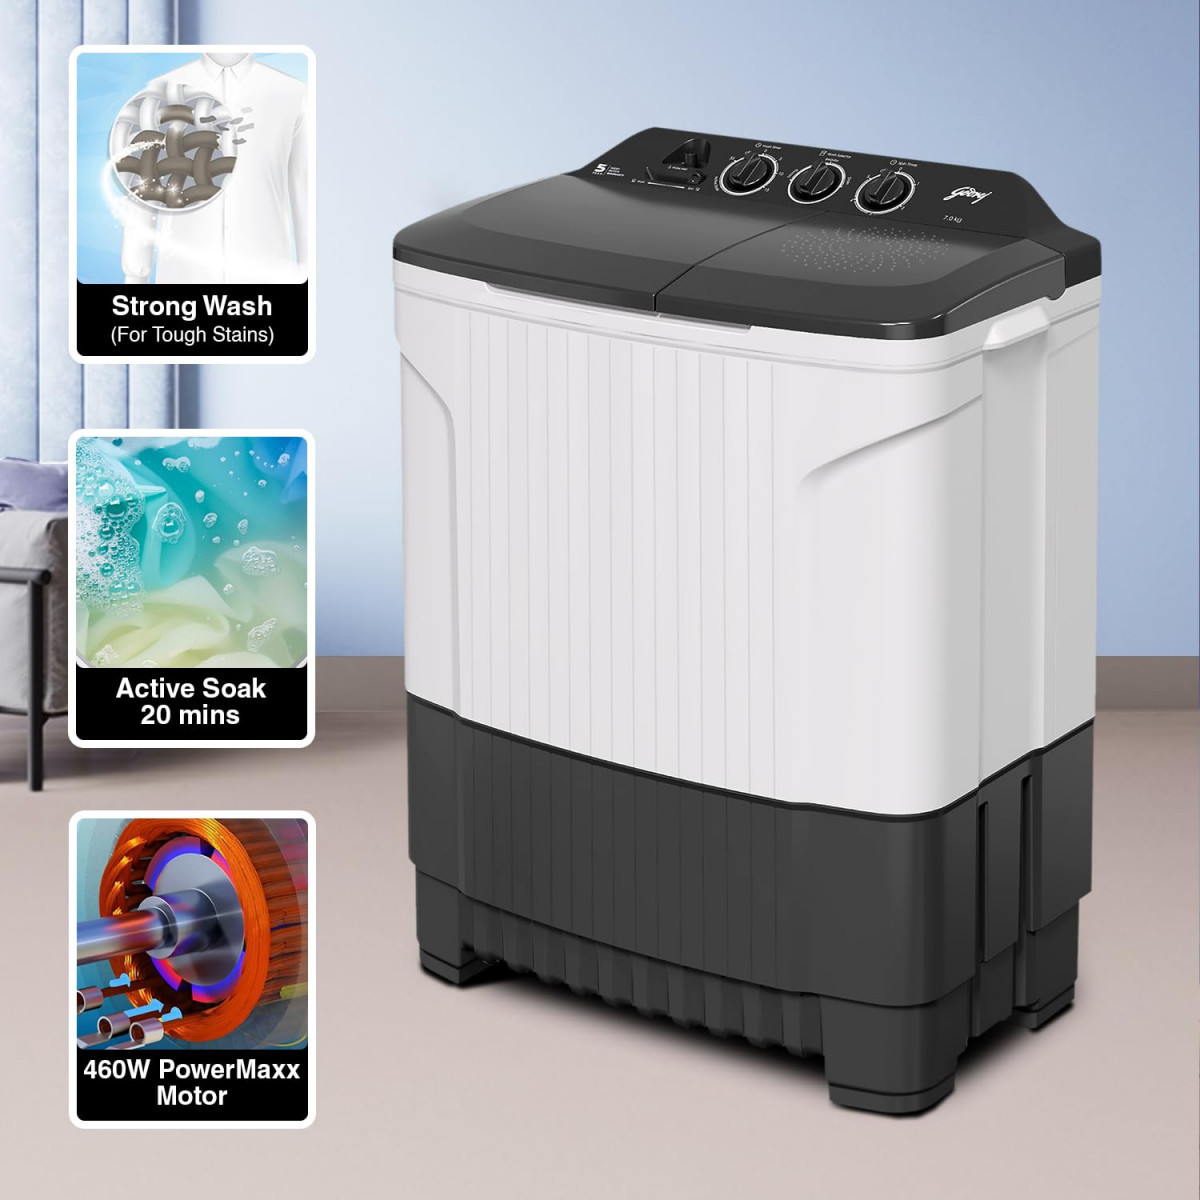 Godrej 7 Kg 5 Star Active Soak Technology Semi-Automatic Top Load Washing Machine WS EDGE CLS 70 50 PN2 GPGR Graphite Grey 460 W PowerMax Wash For Heavy Laundry Wash